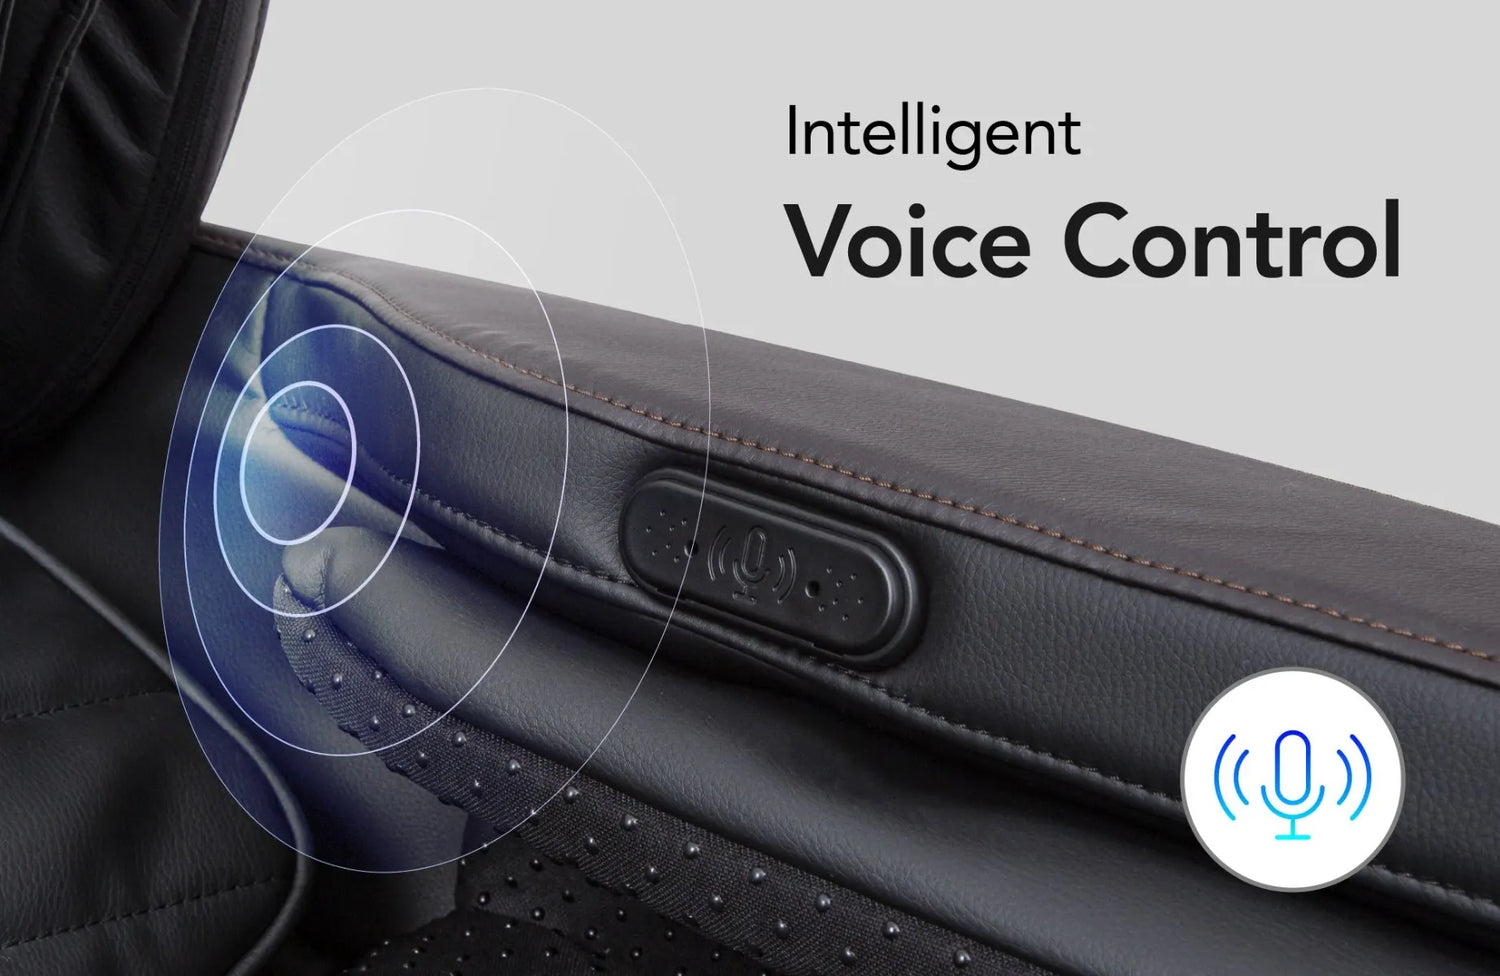 The Titan Jupiter Premium LE Massage Chair has intelligent voice control to speak out your hands-free commands.